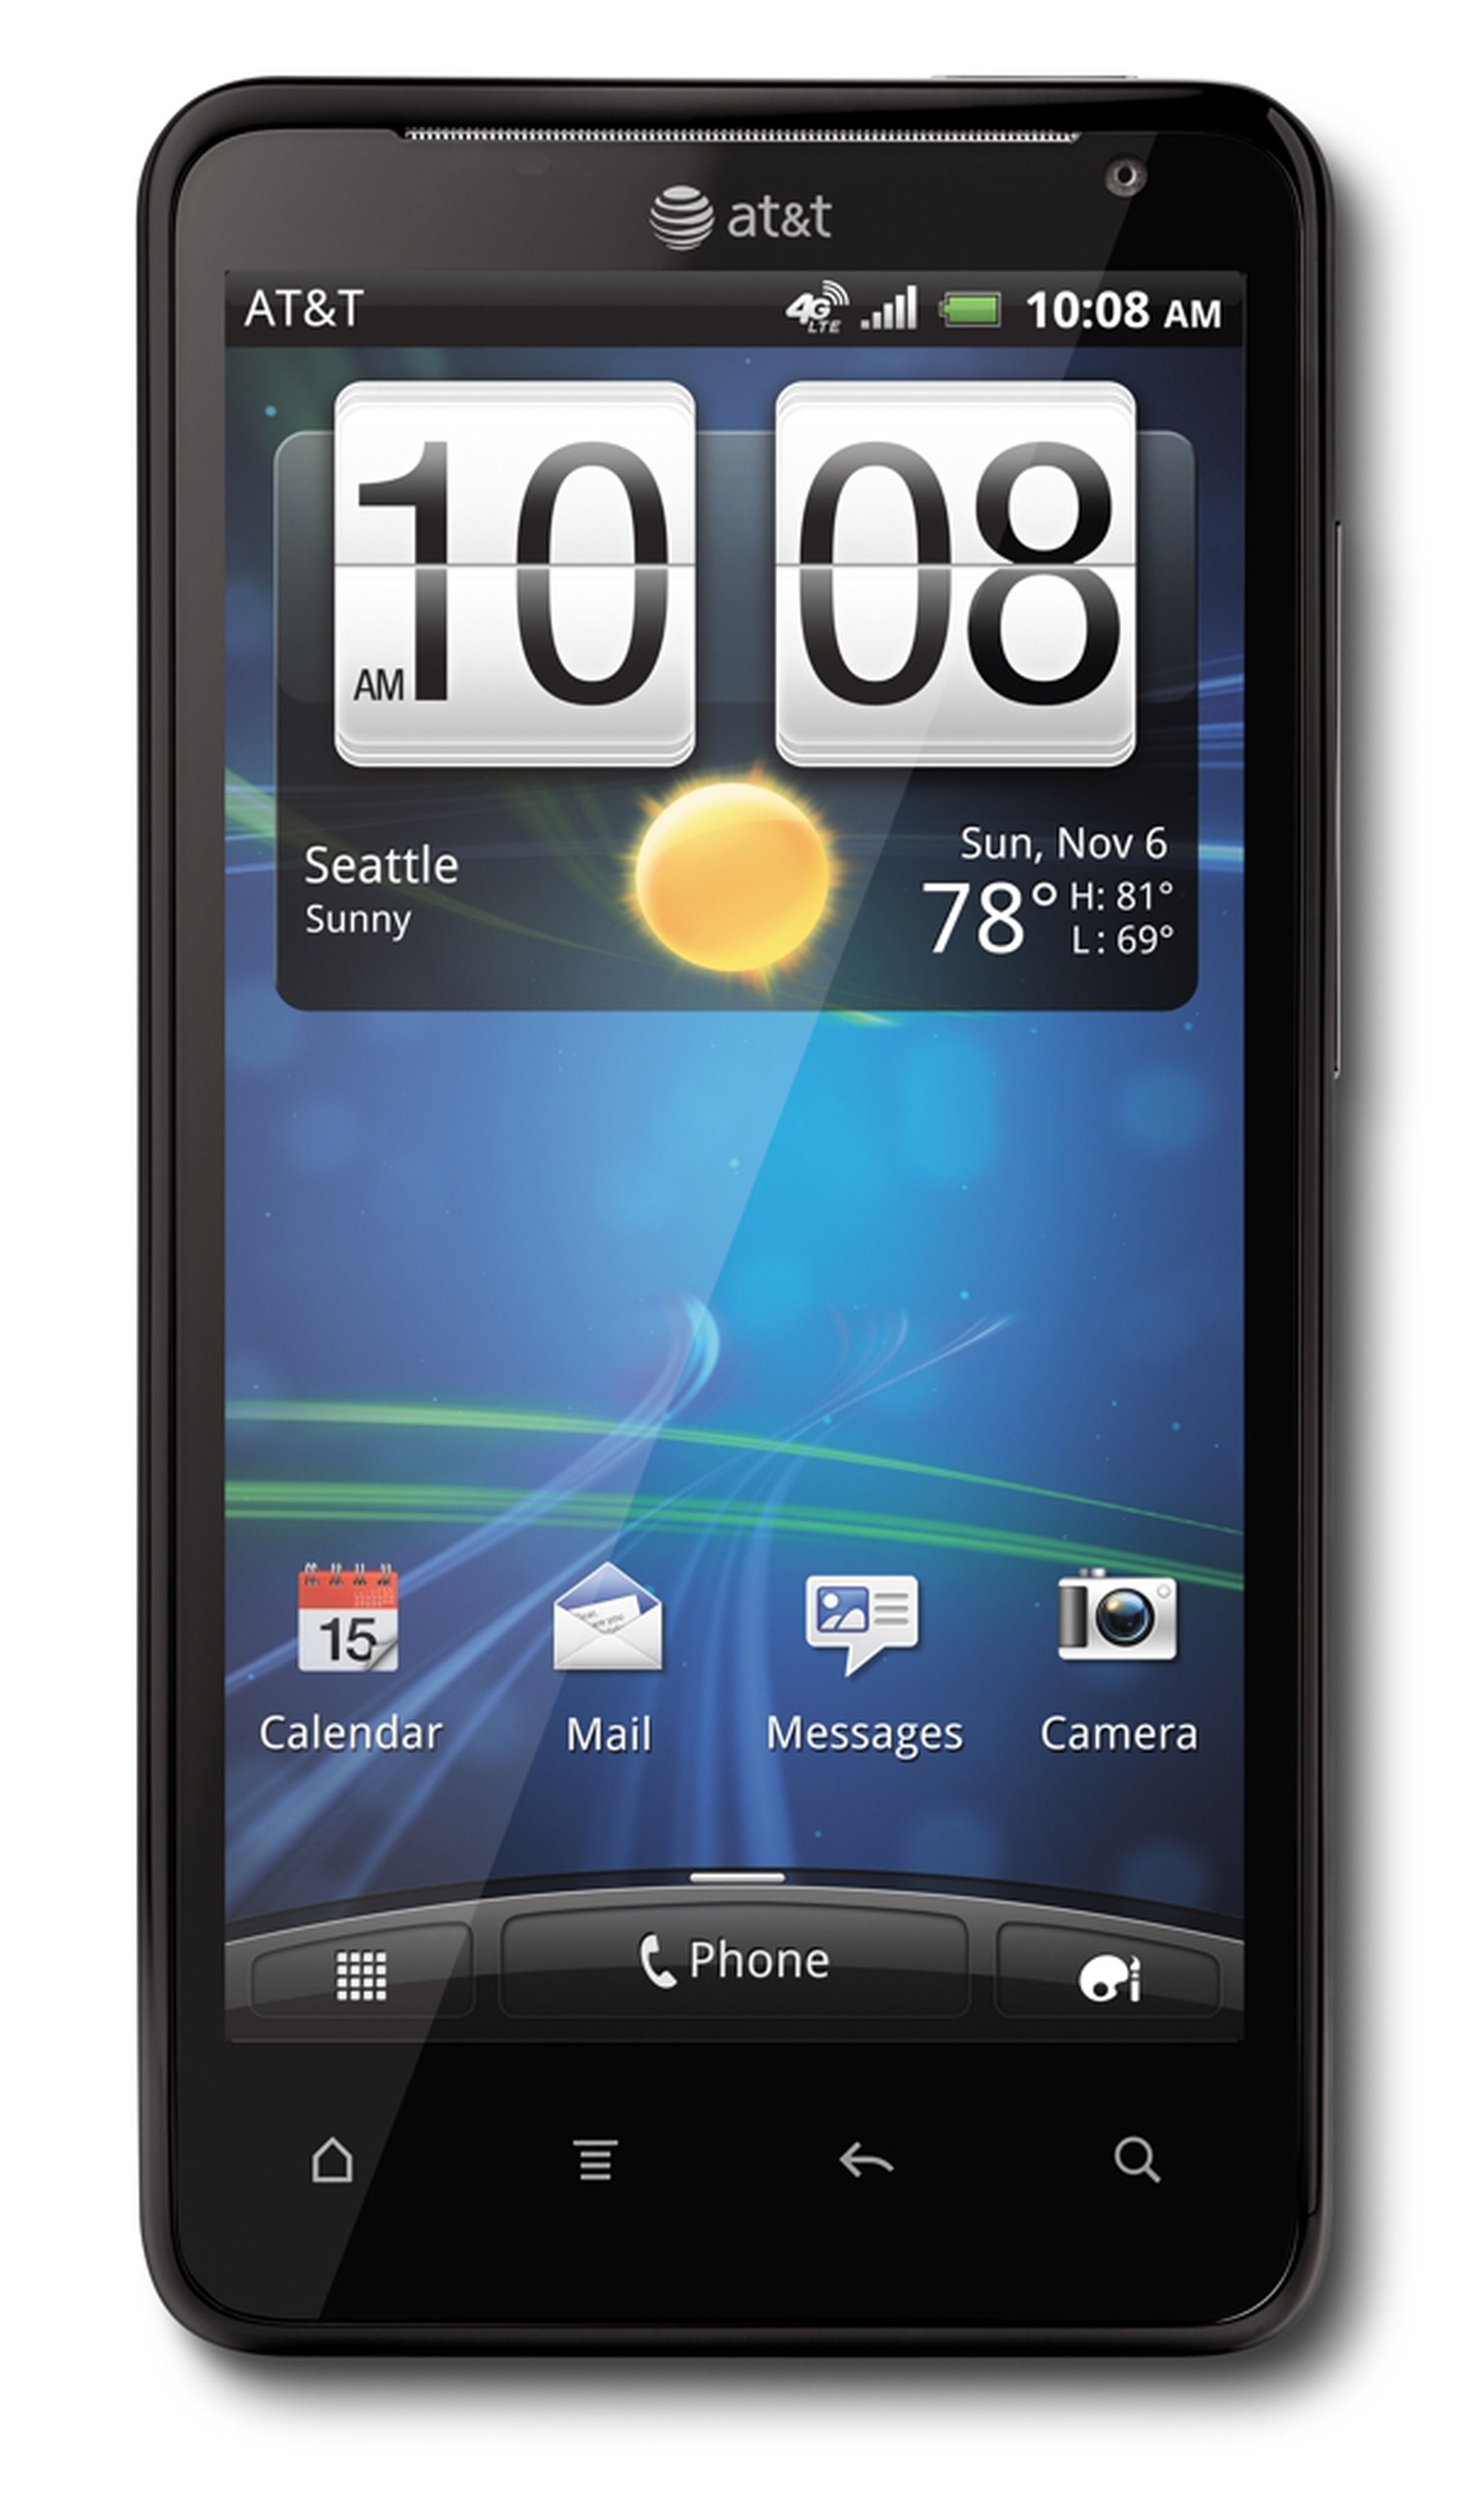 Samsung Galaxy S II Skyrocket & HTC Vivid, AT&T's first LTE phones